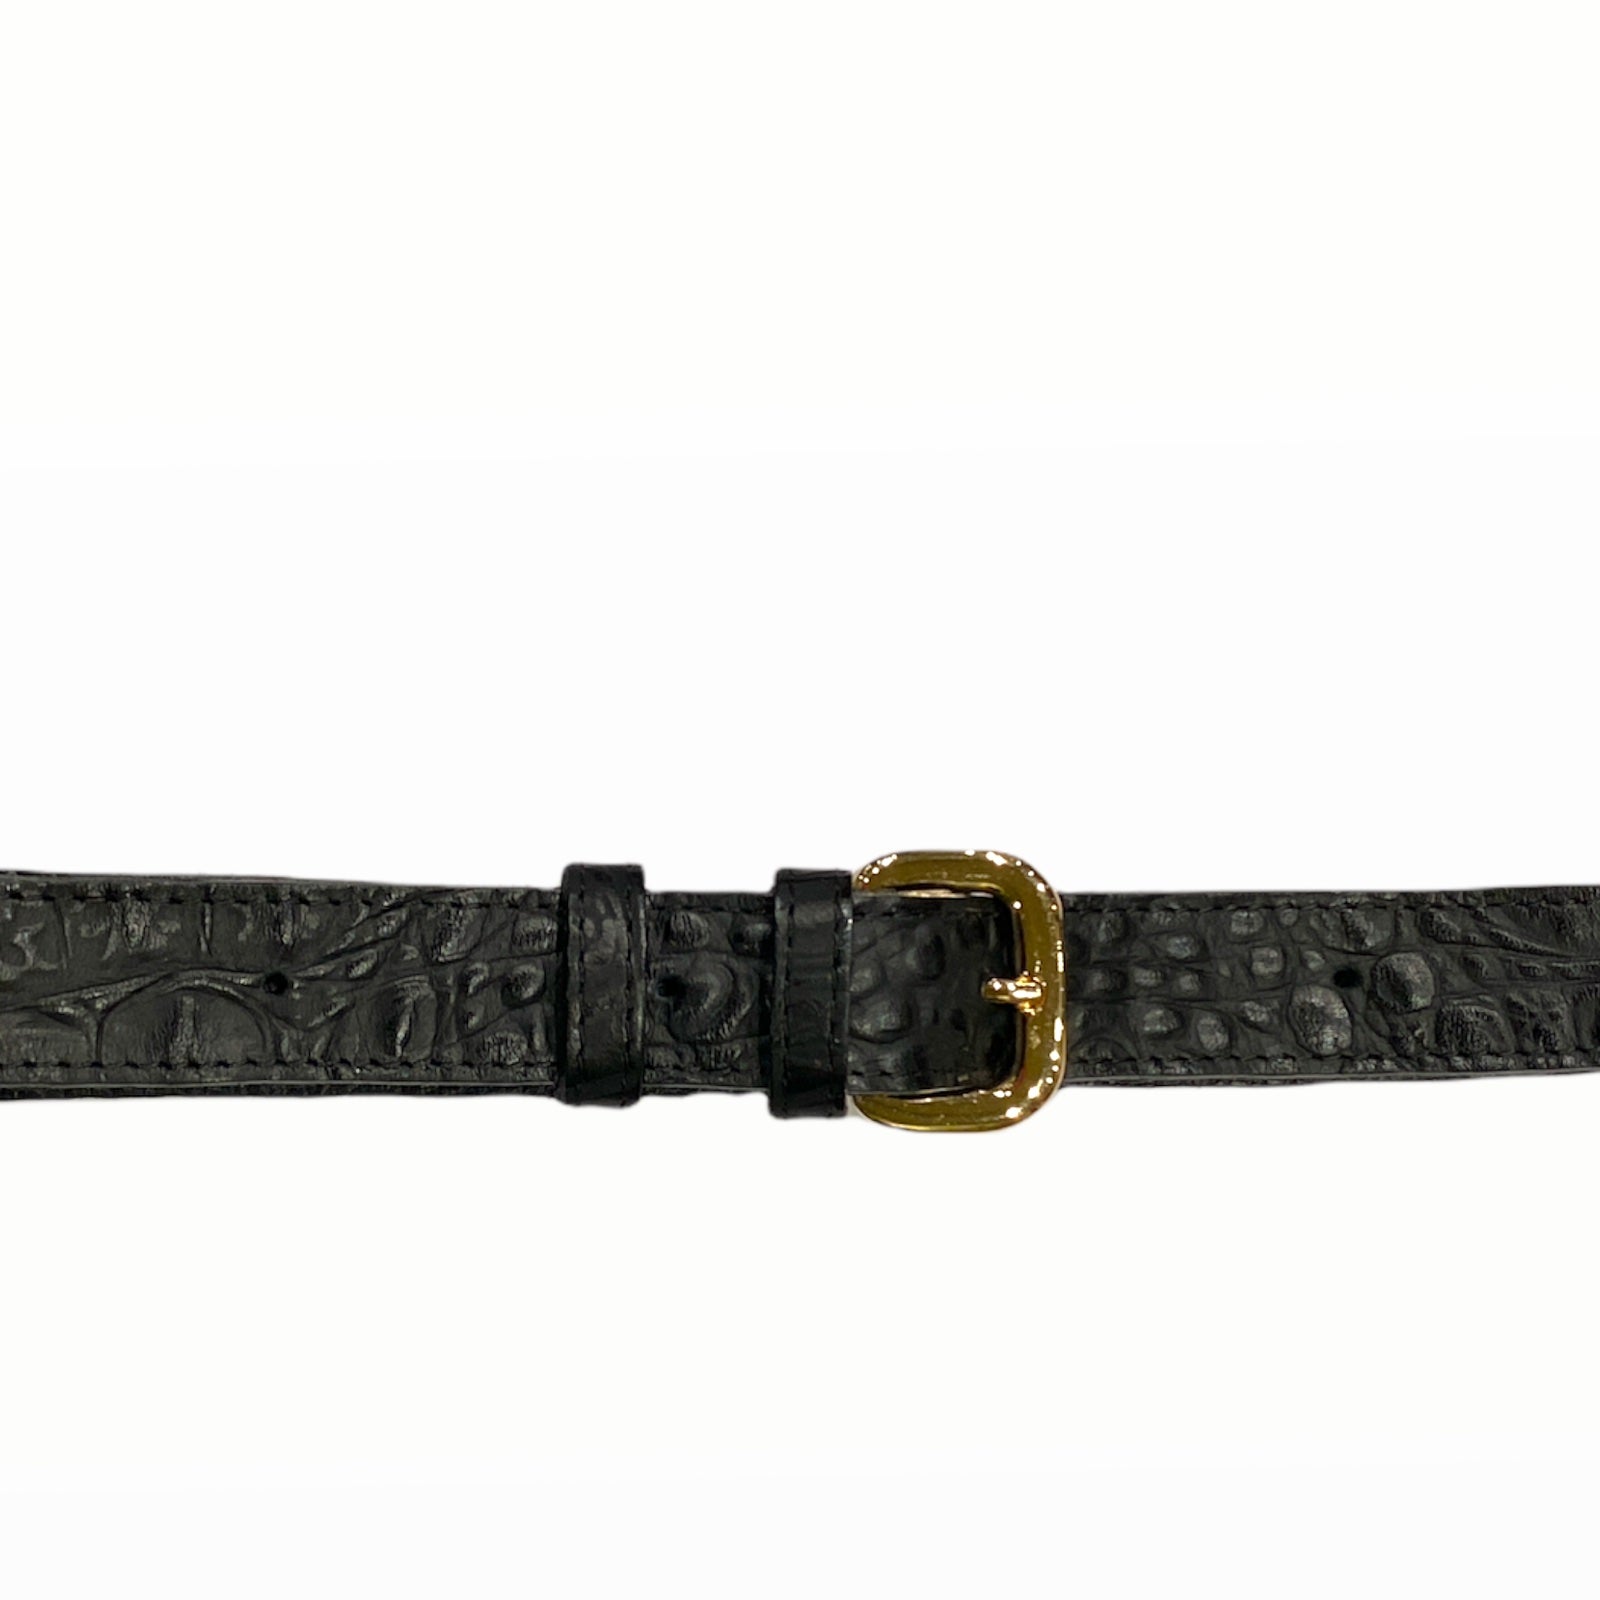 Black alligator-print leather thin belt